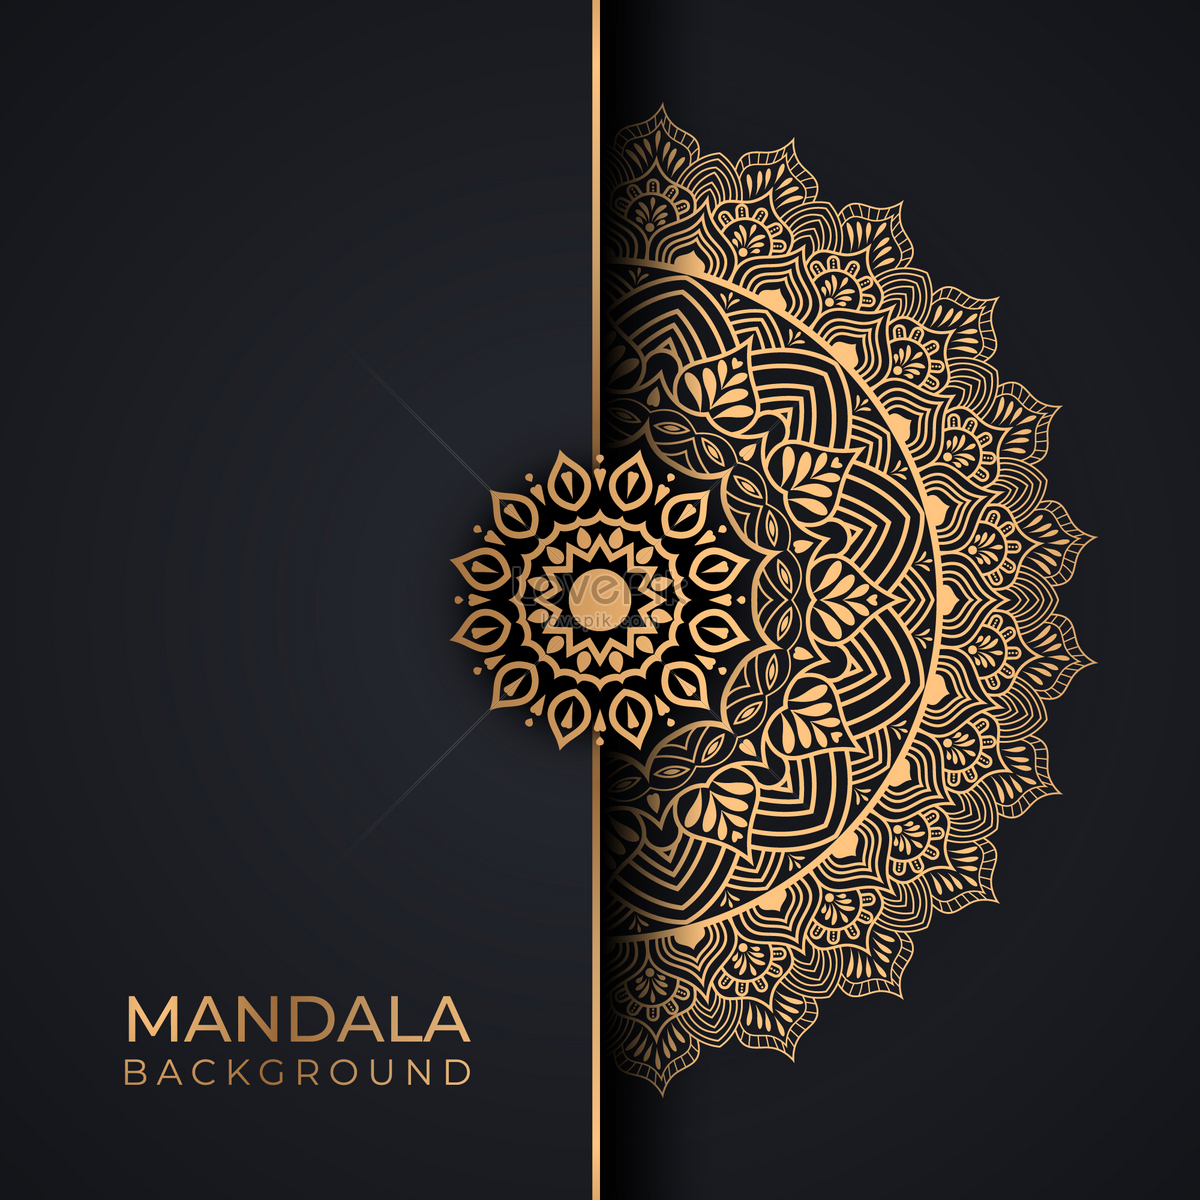 Decorative Luxury Indian Mandala Background Design Download Free | Banner  Background Image on Lovepik | 450075909